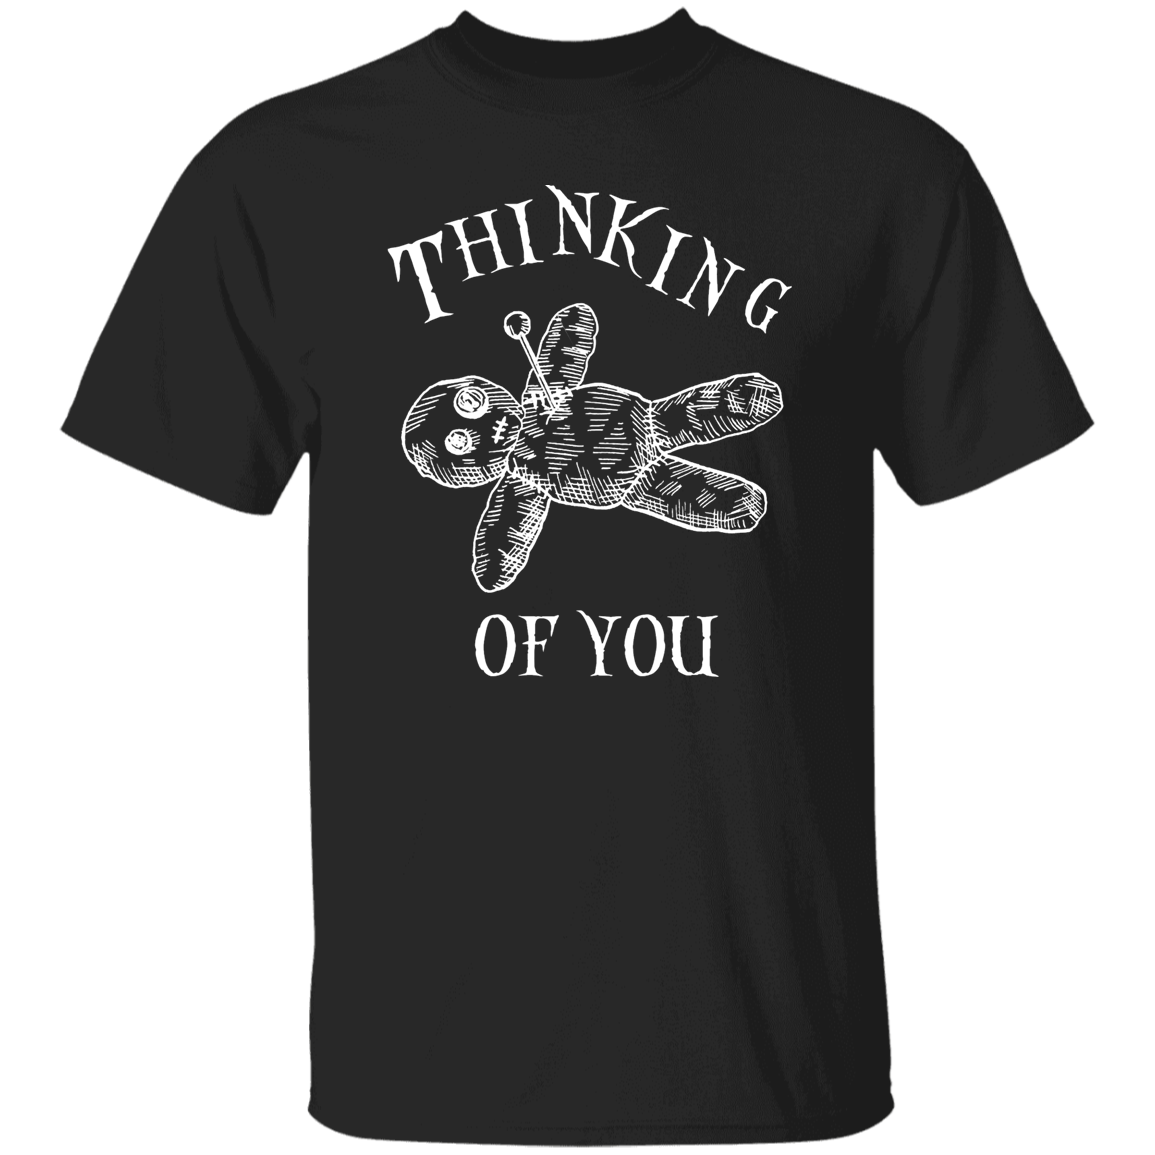 THINKING OF YOU 5.3 oz. T-Shirt